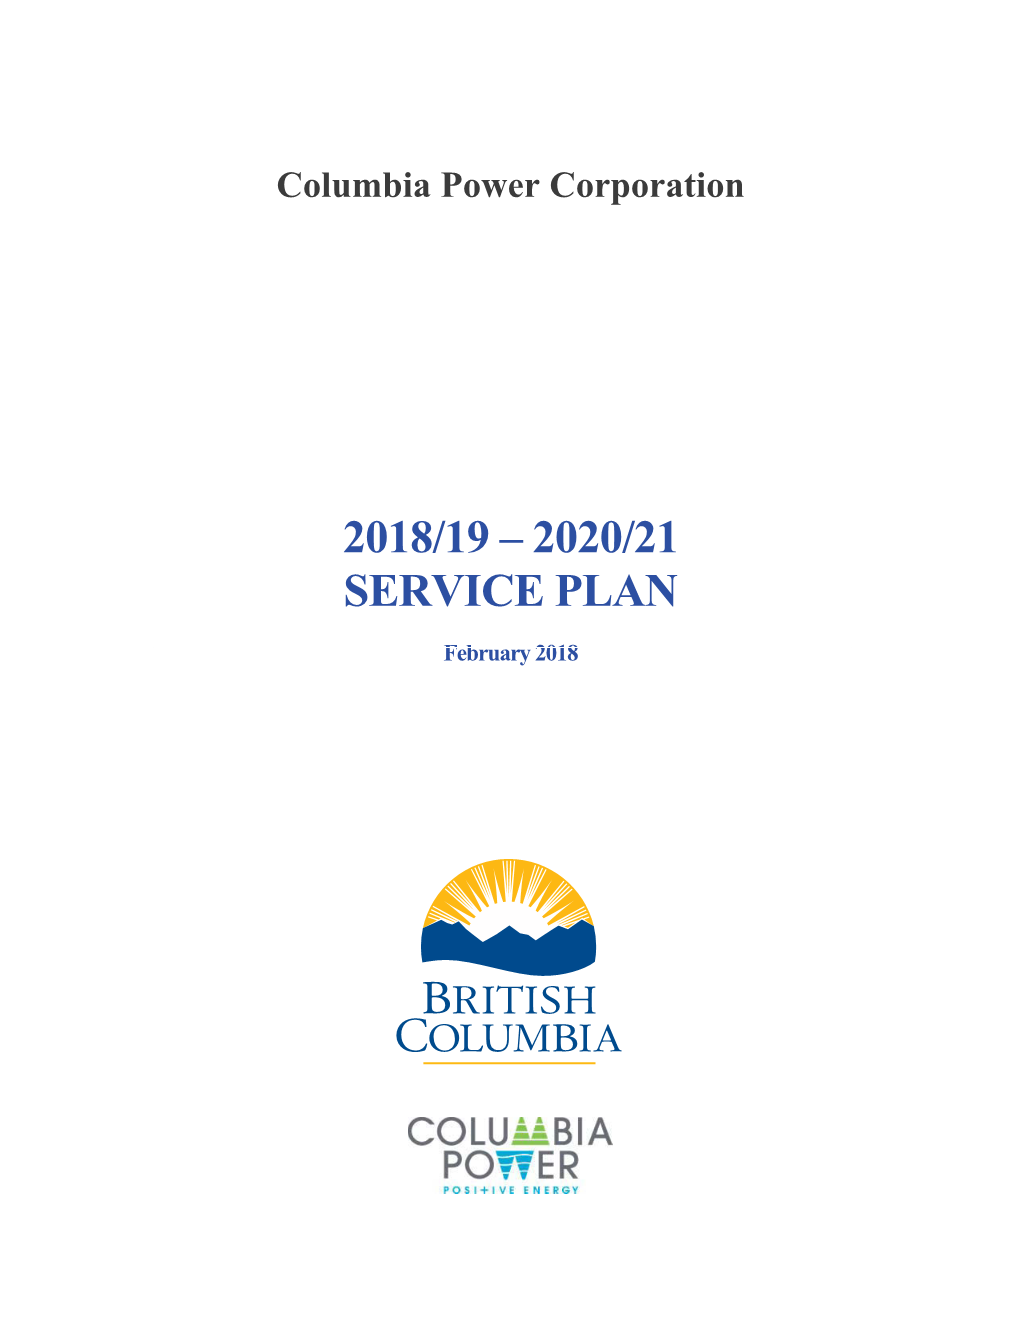 Columbia Power Corporation 2018/19